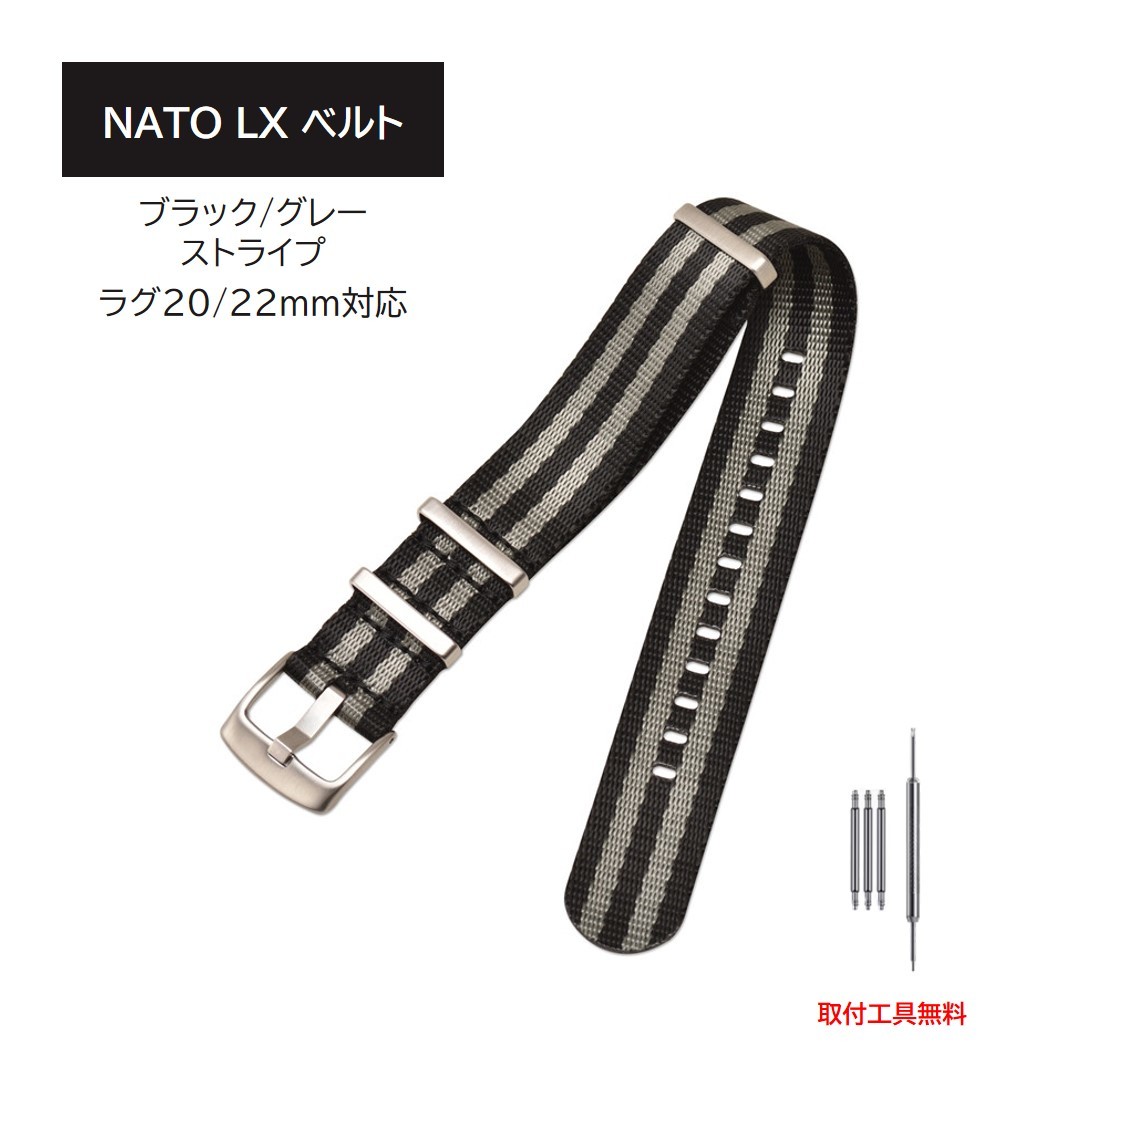 NATO LX ремень ковер 20mm 22mm черный / серый полоса 